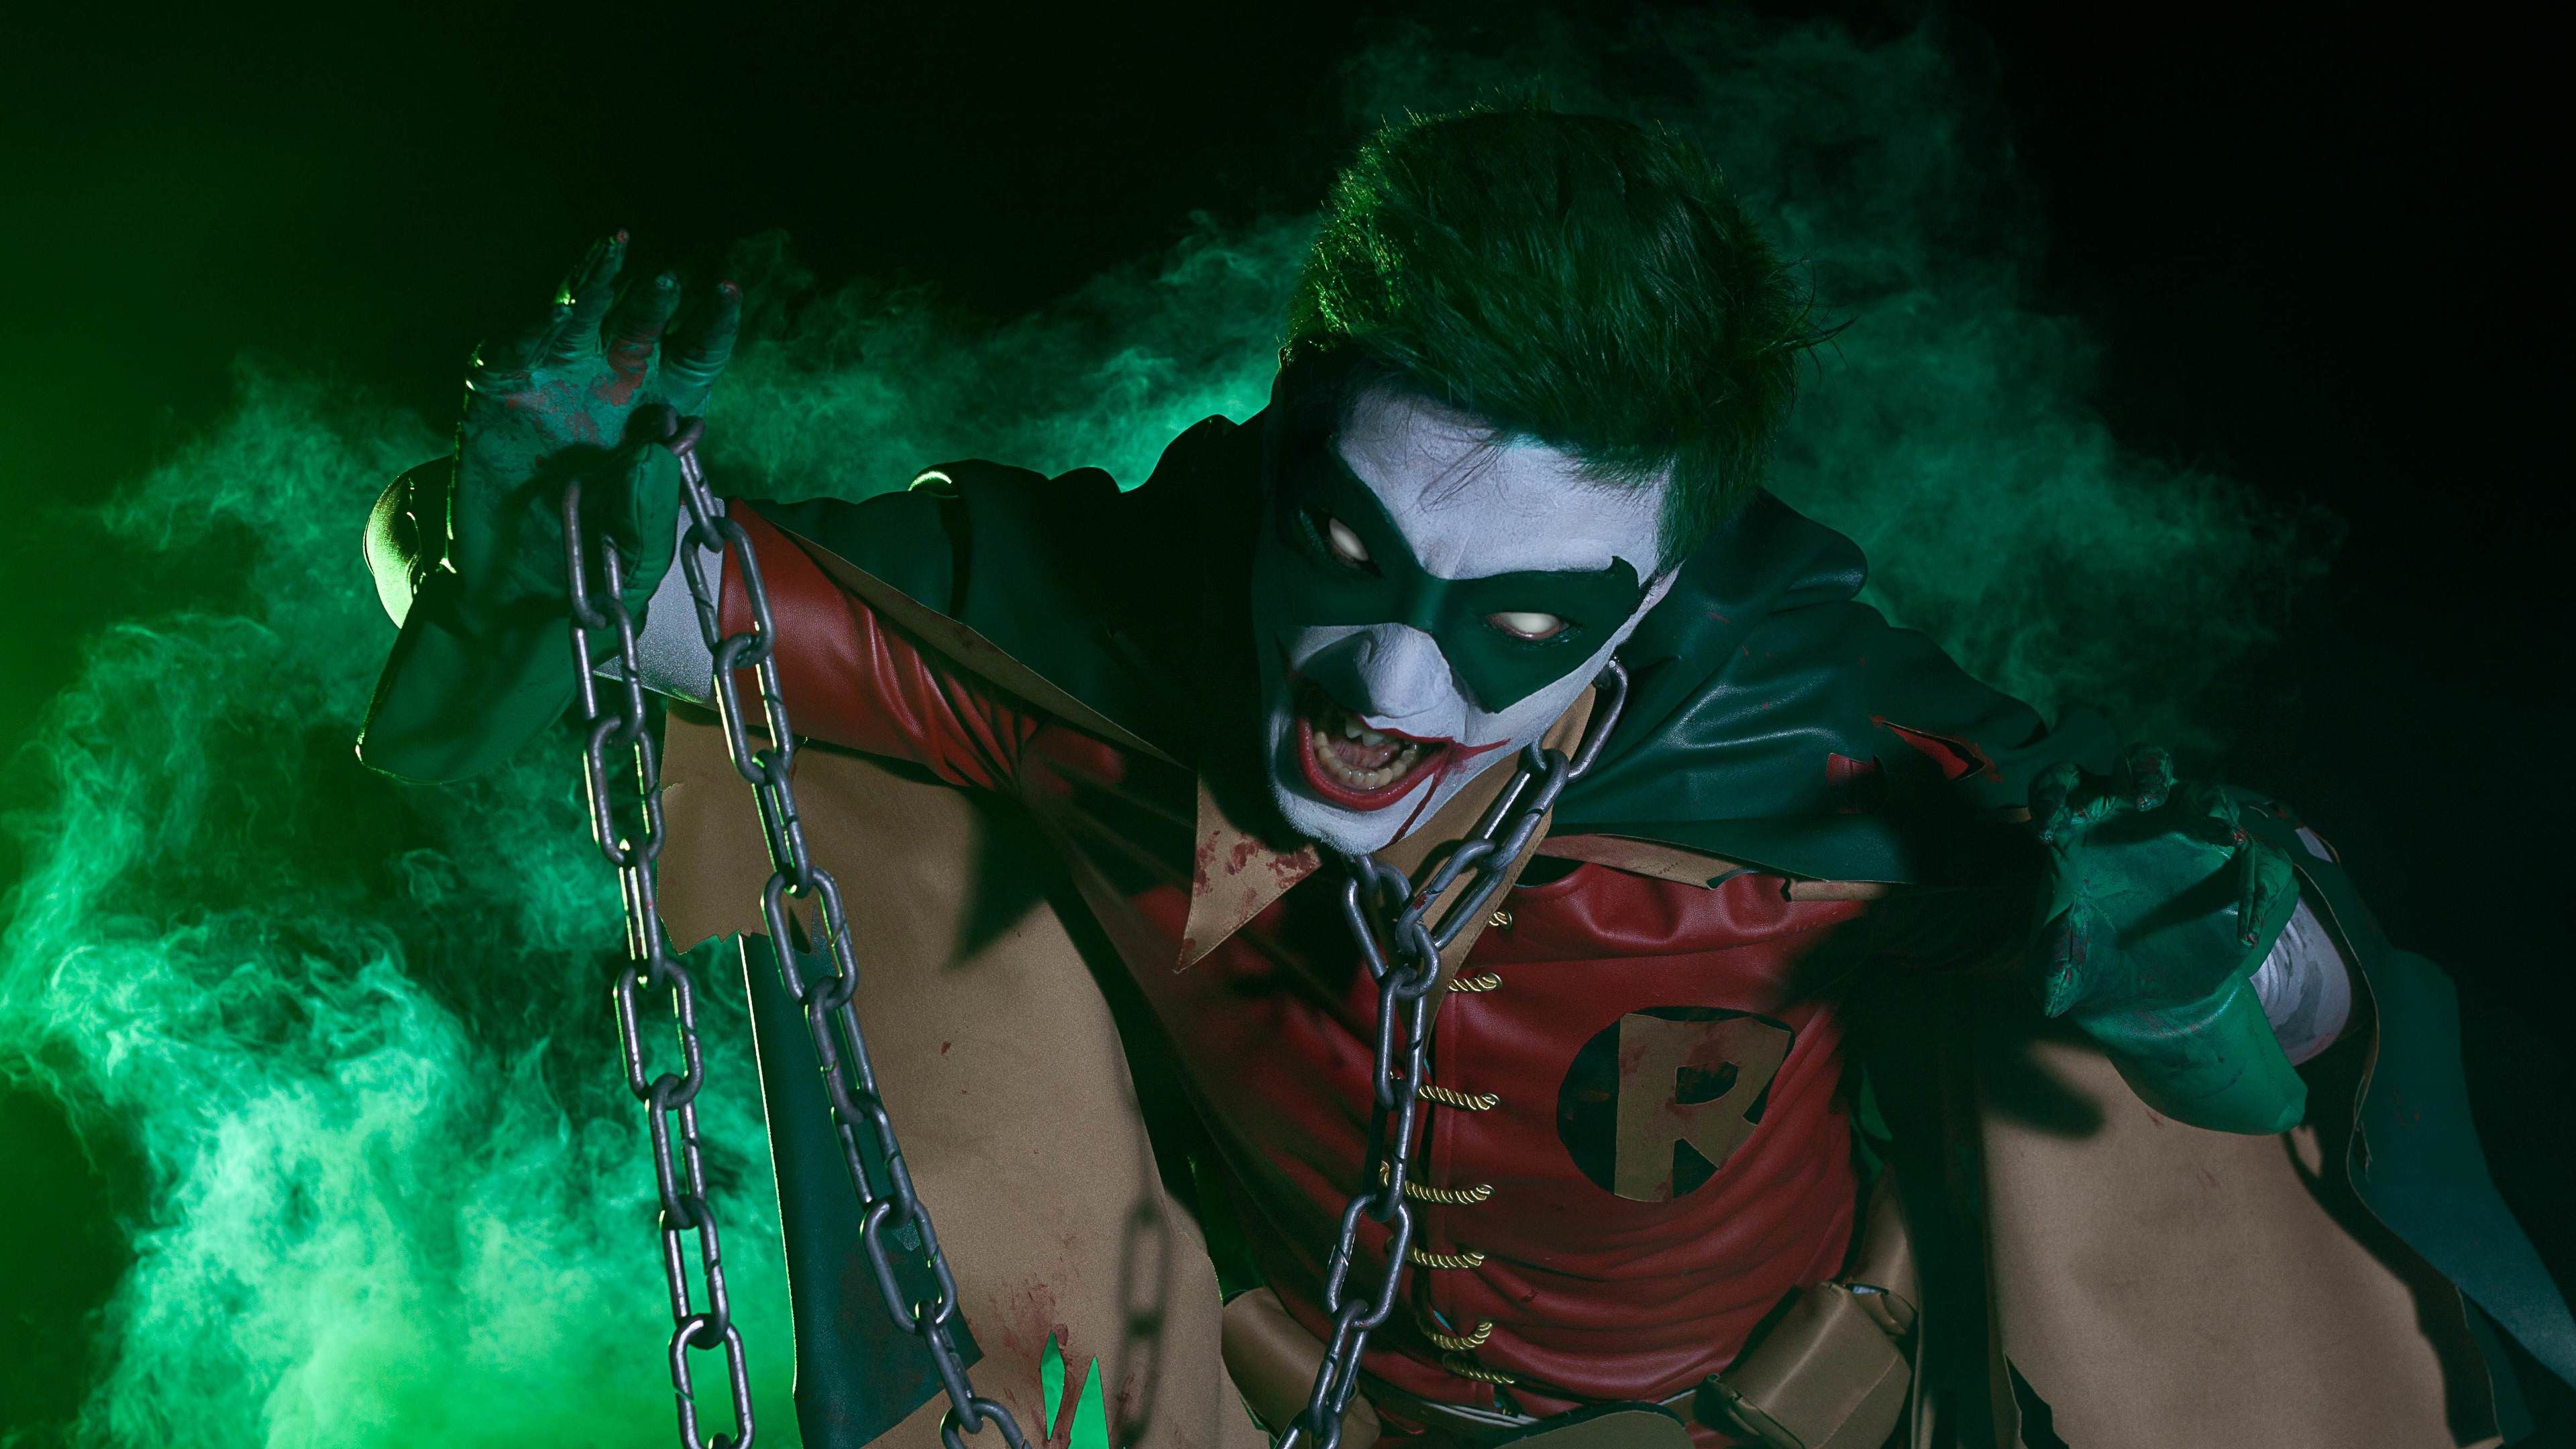 Robin As Joker Cosplay 4k Superheroes Wallpaper, Robin Wallpaper, Hd Wallpaper, Cosplay Wallpaper, 4k Wallpaper. Joker Cosplay, Cosplay, Joker